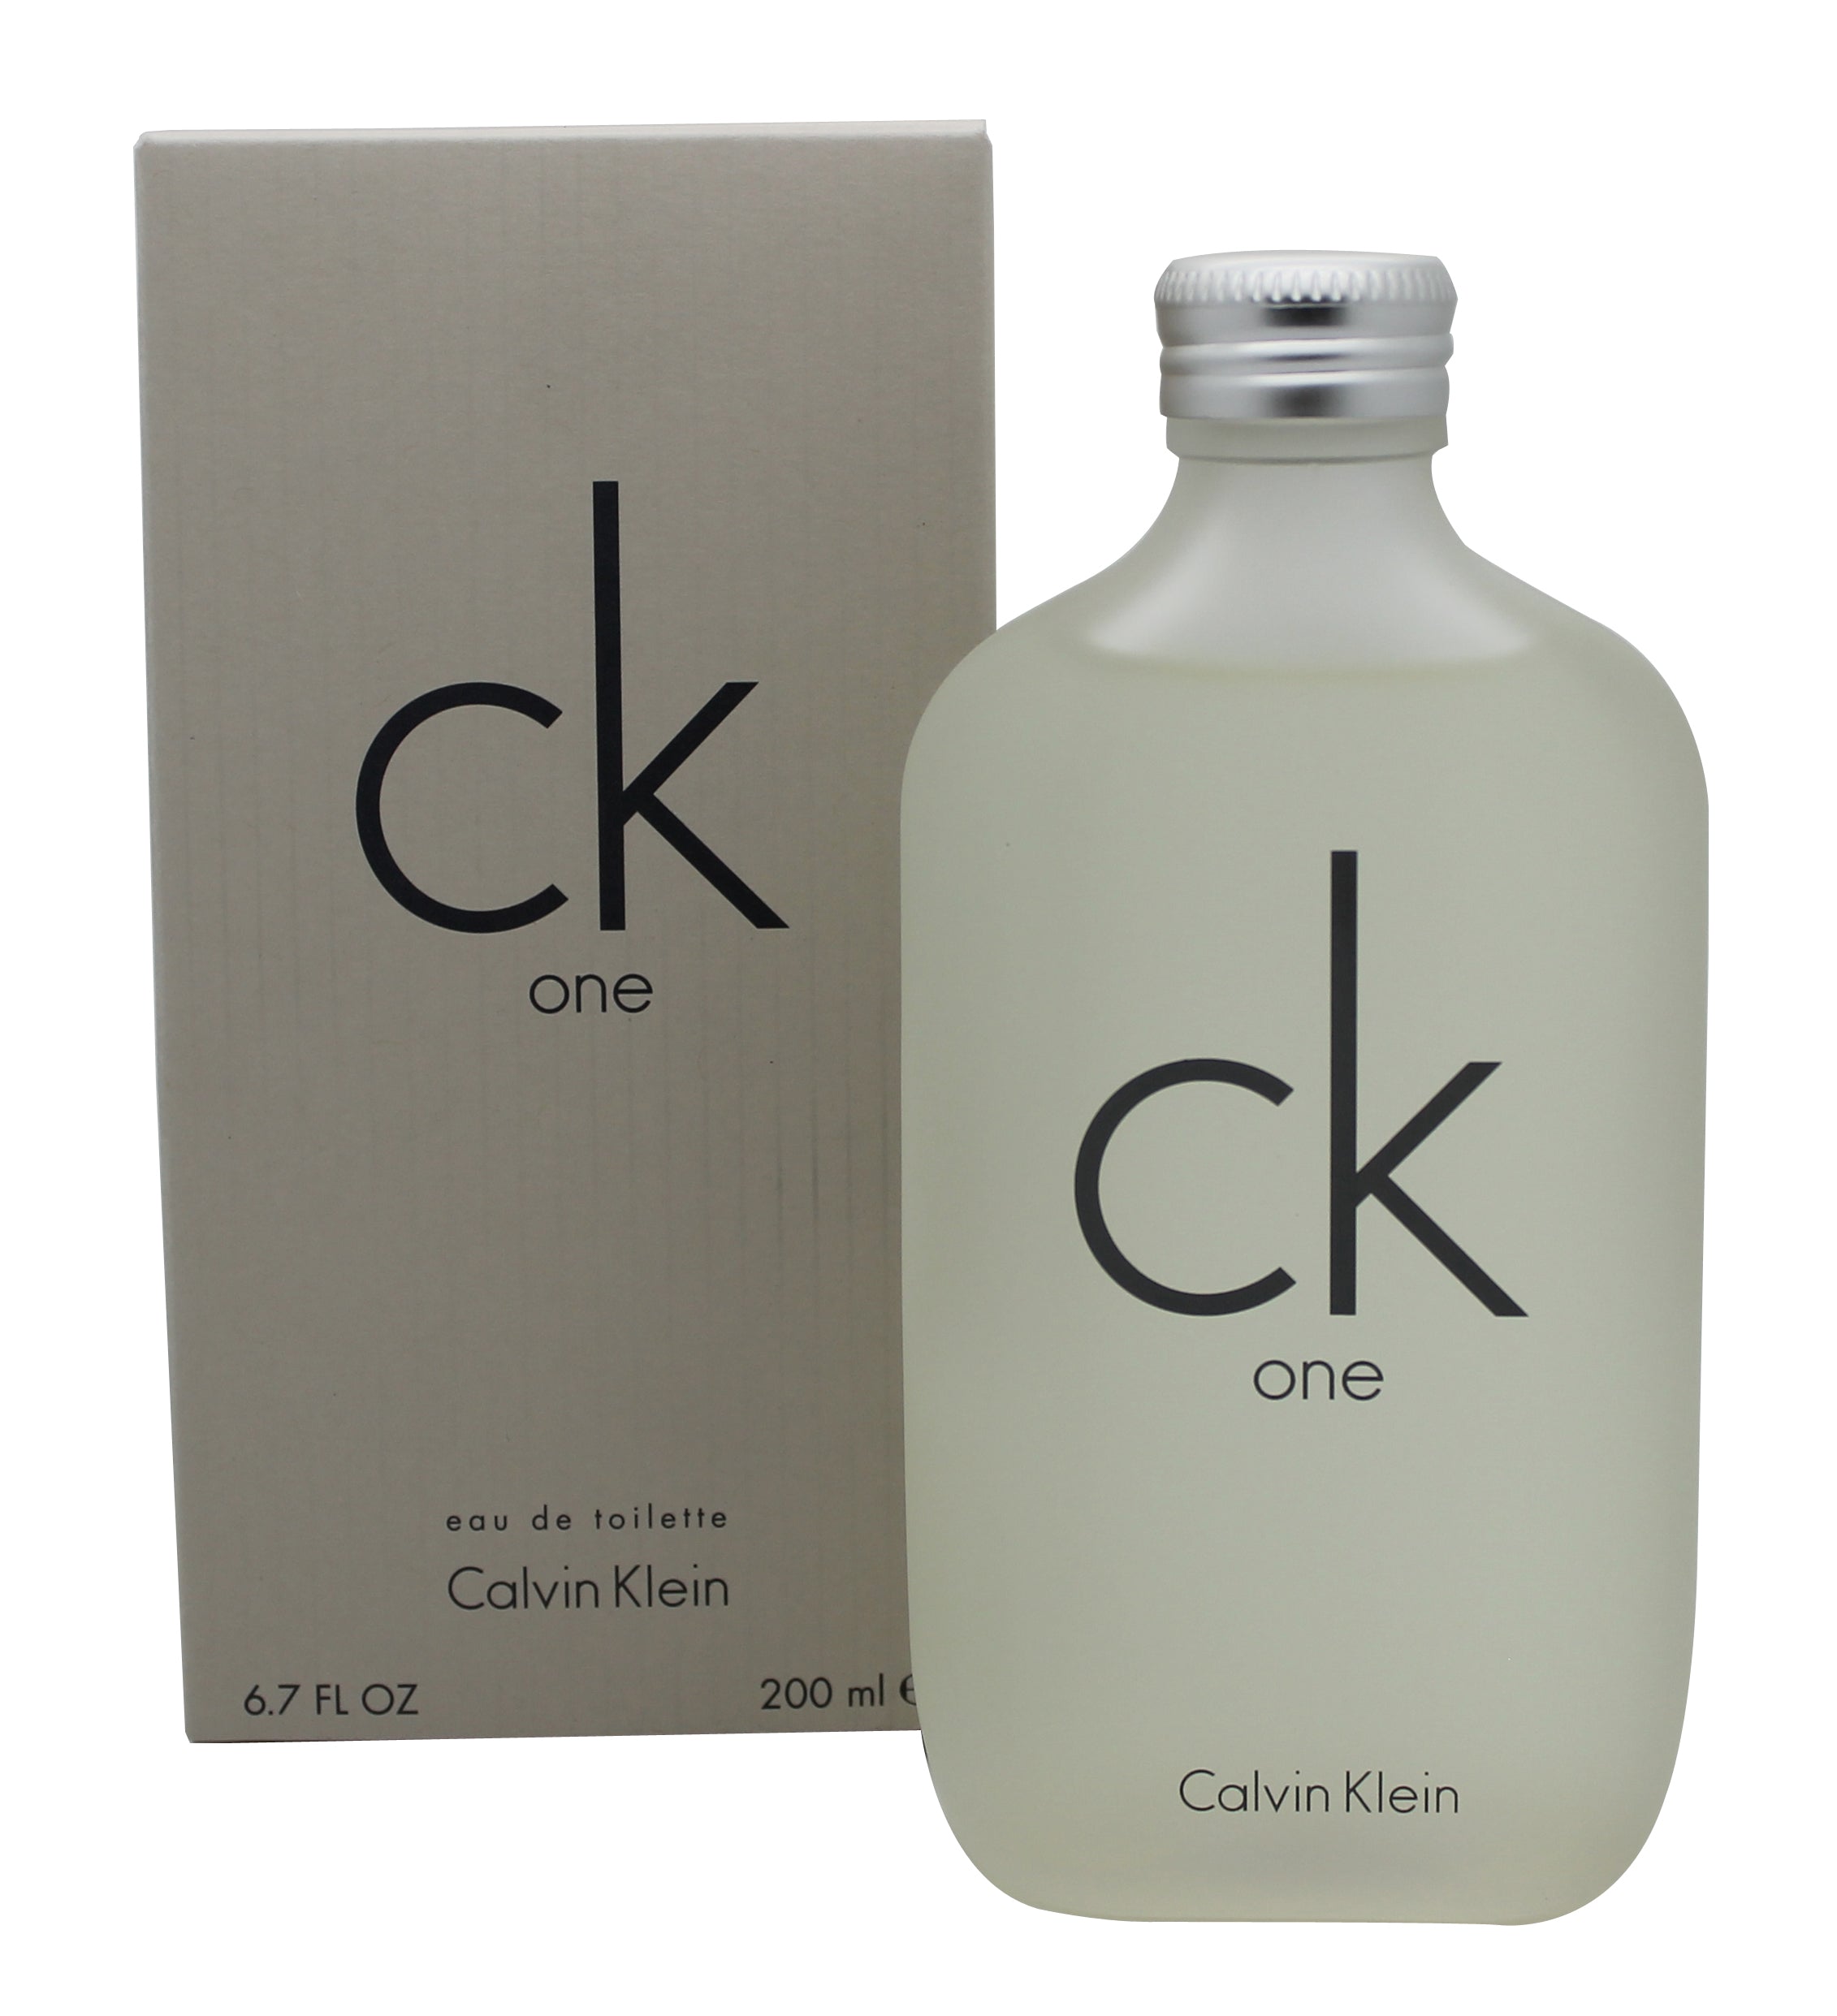 View Calvin Klein CK One Eau de Toilette 200ml Sprej information